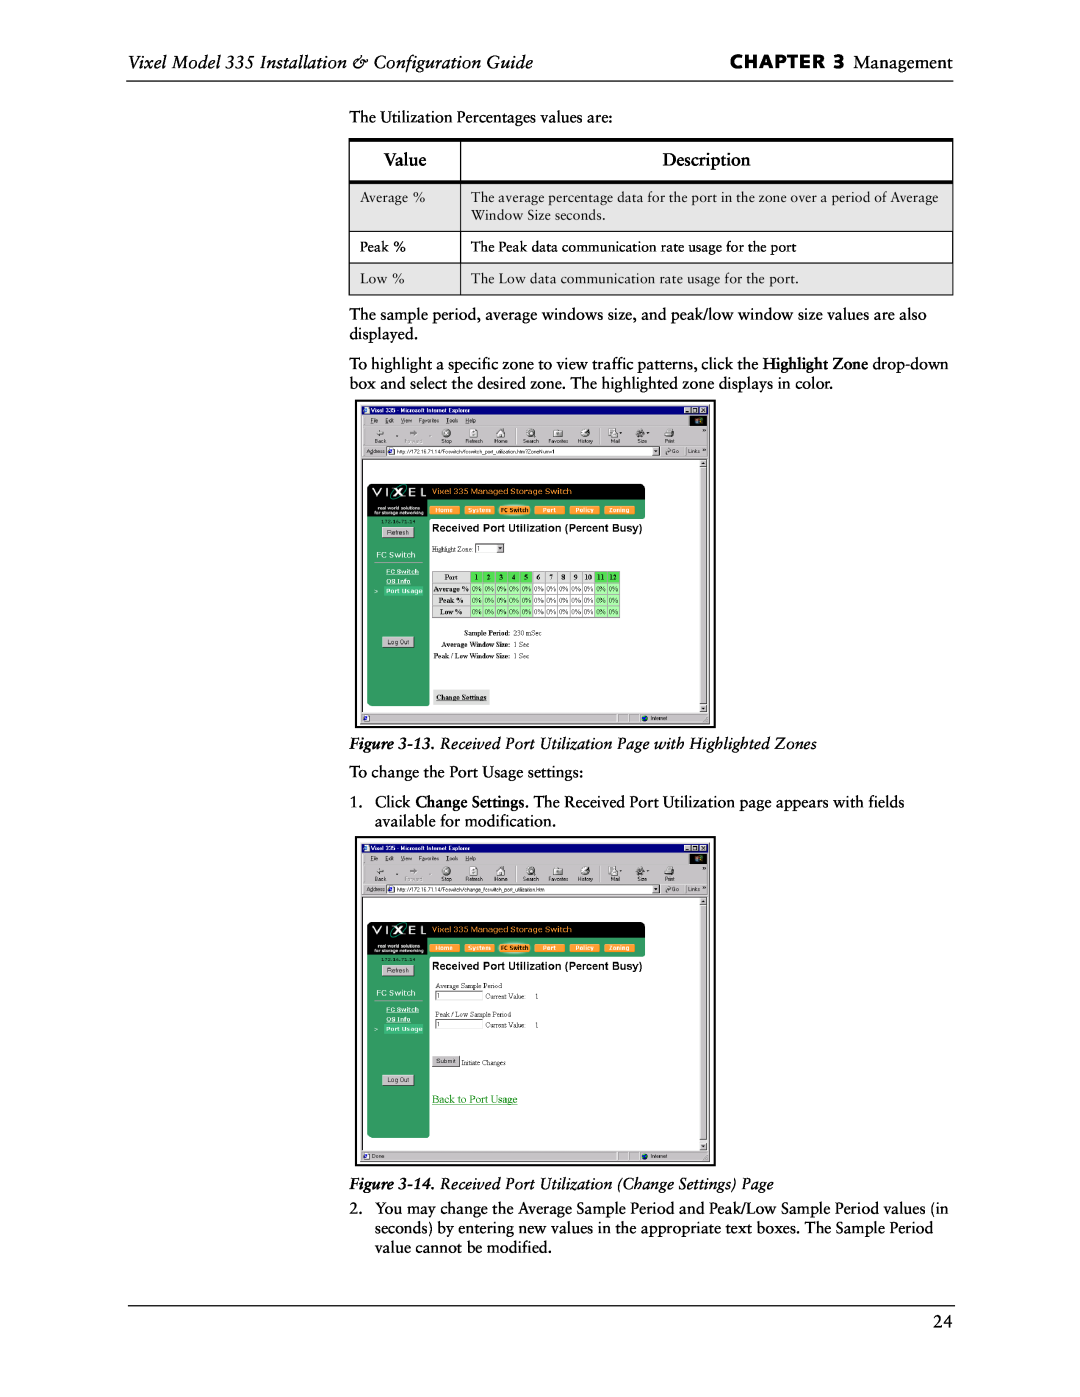 Vixel manual Management, Vixel Model 335 Installation & Configuration Guide, Value, Description 